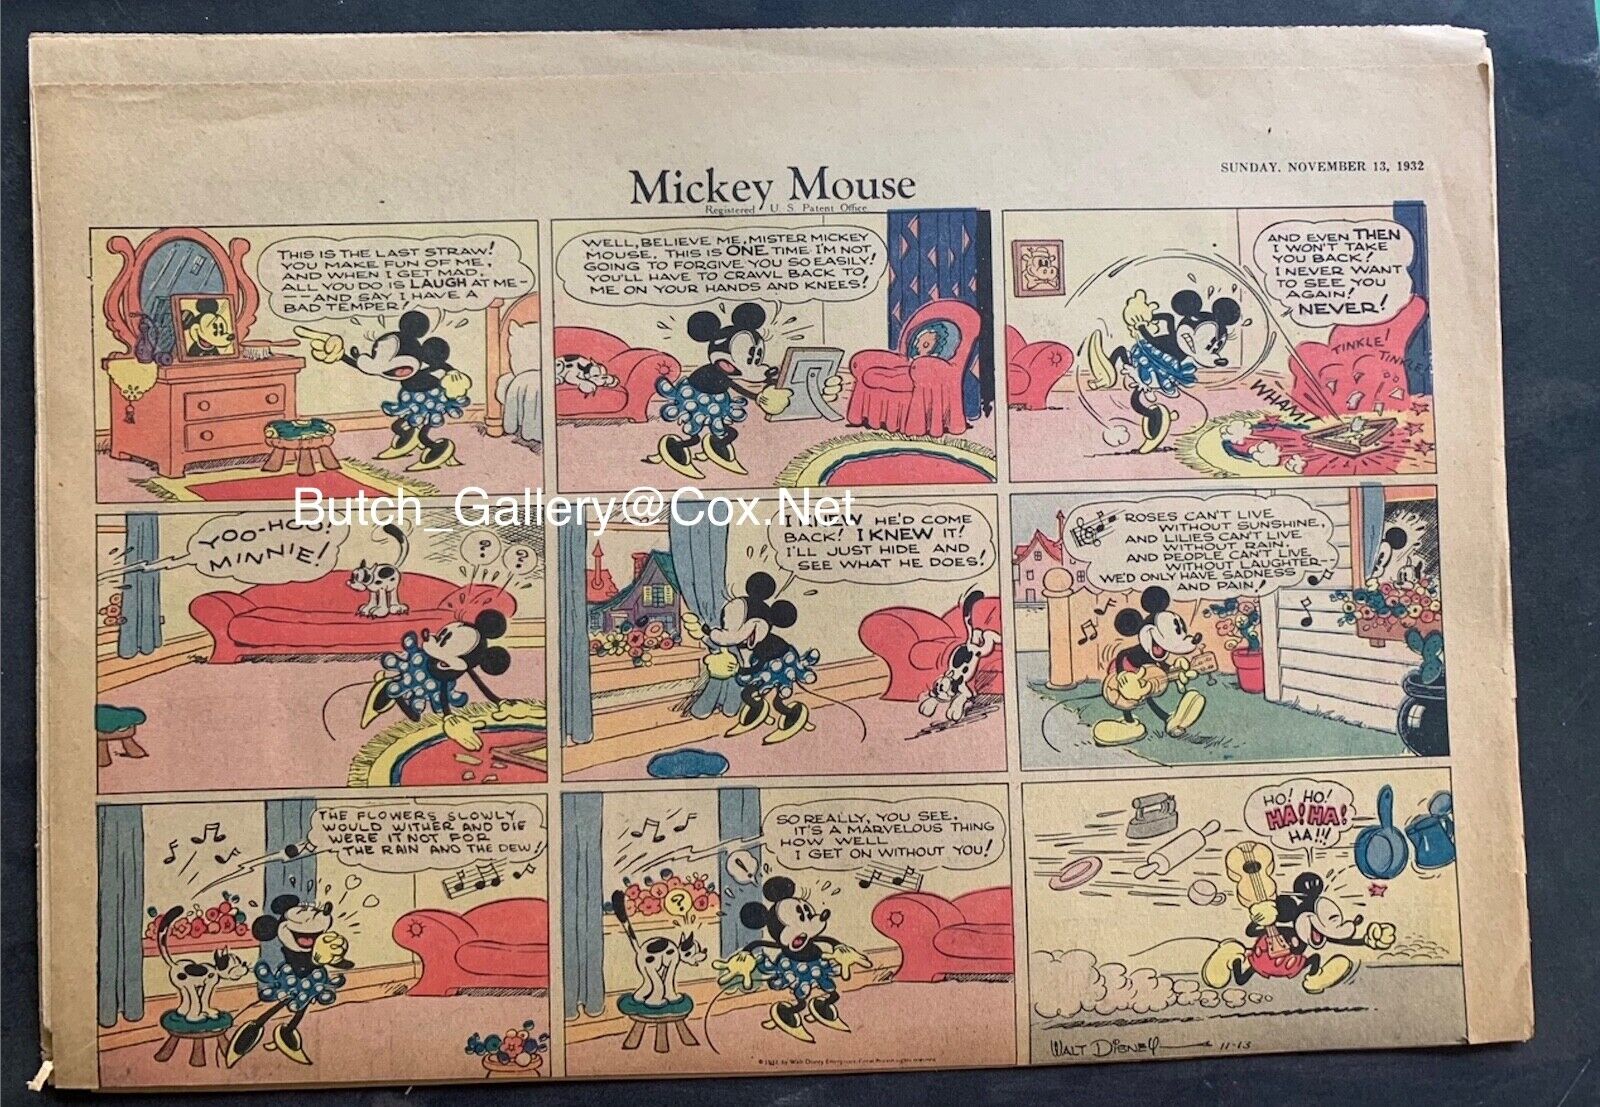 MICKEY MOUSE Nov 13, 1932 Sunday Newspaper Comic Strip half page